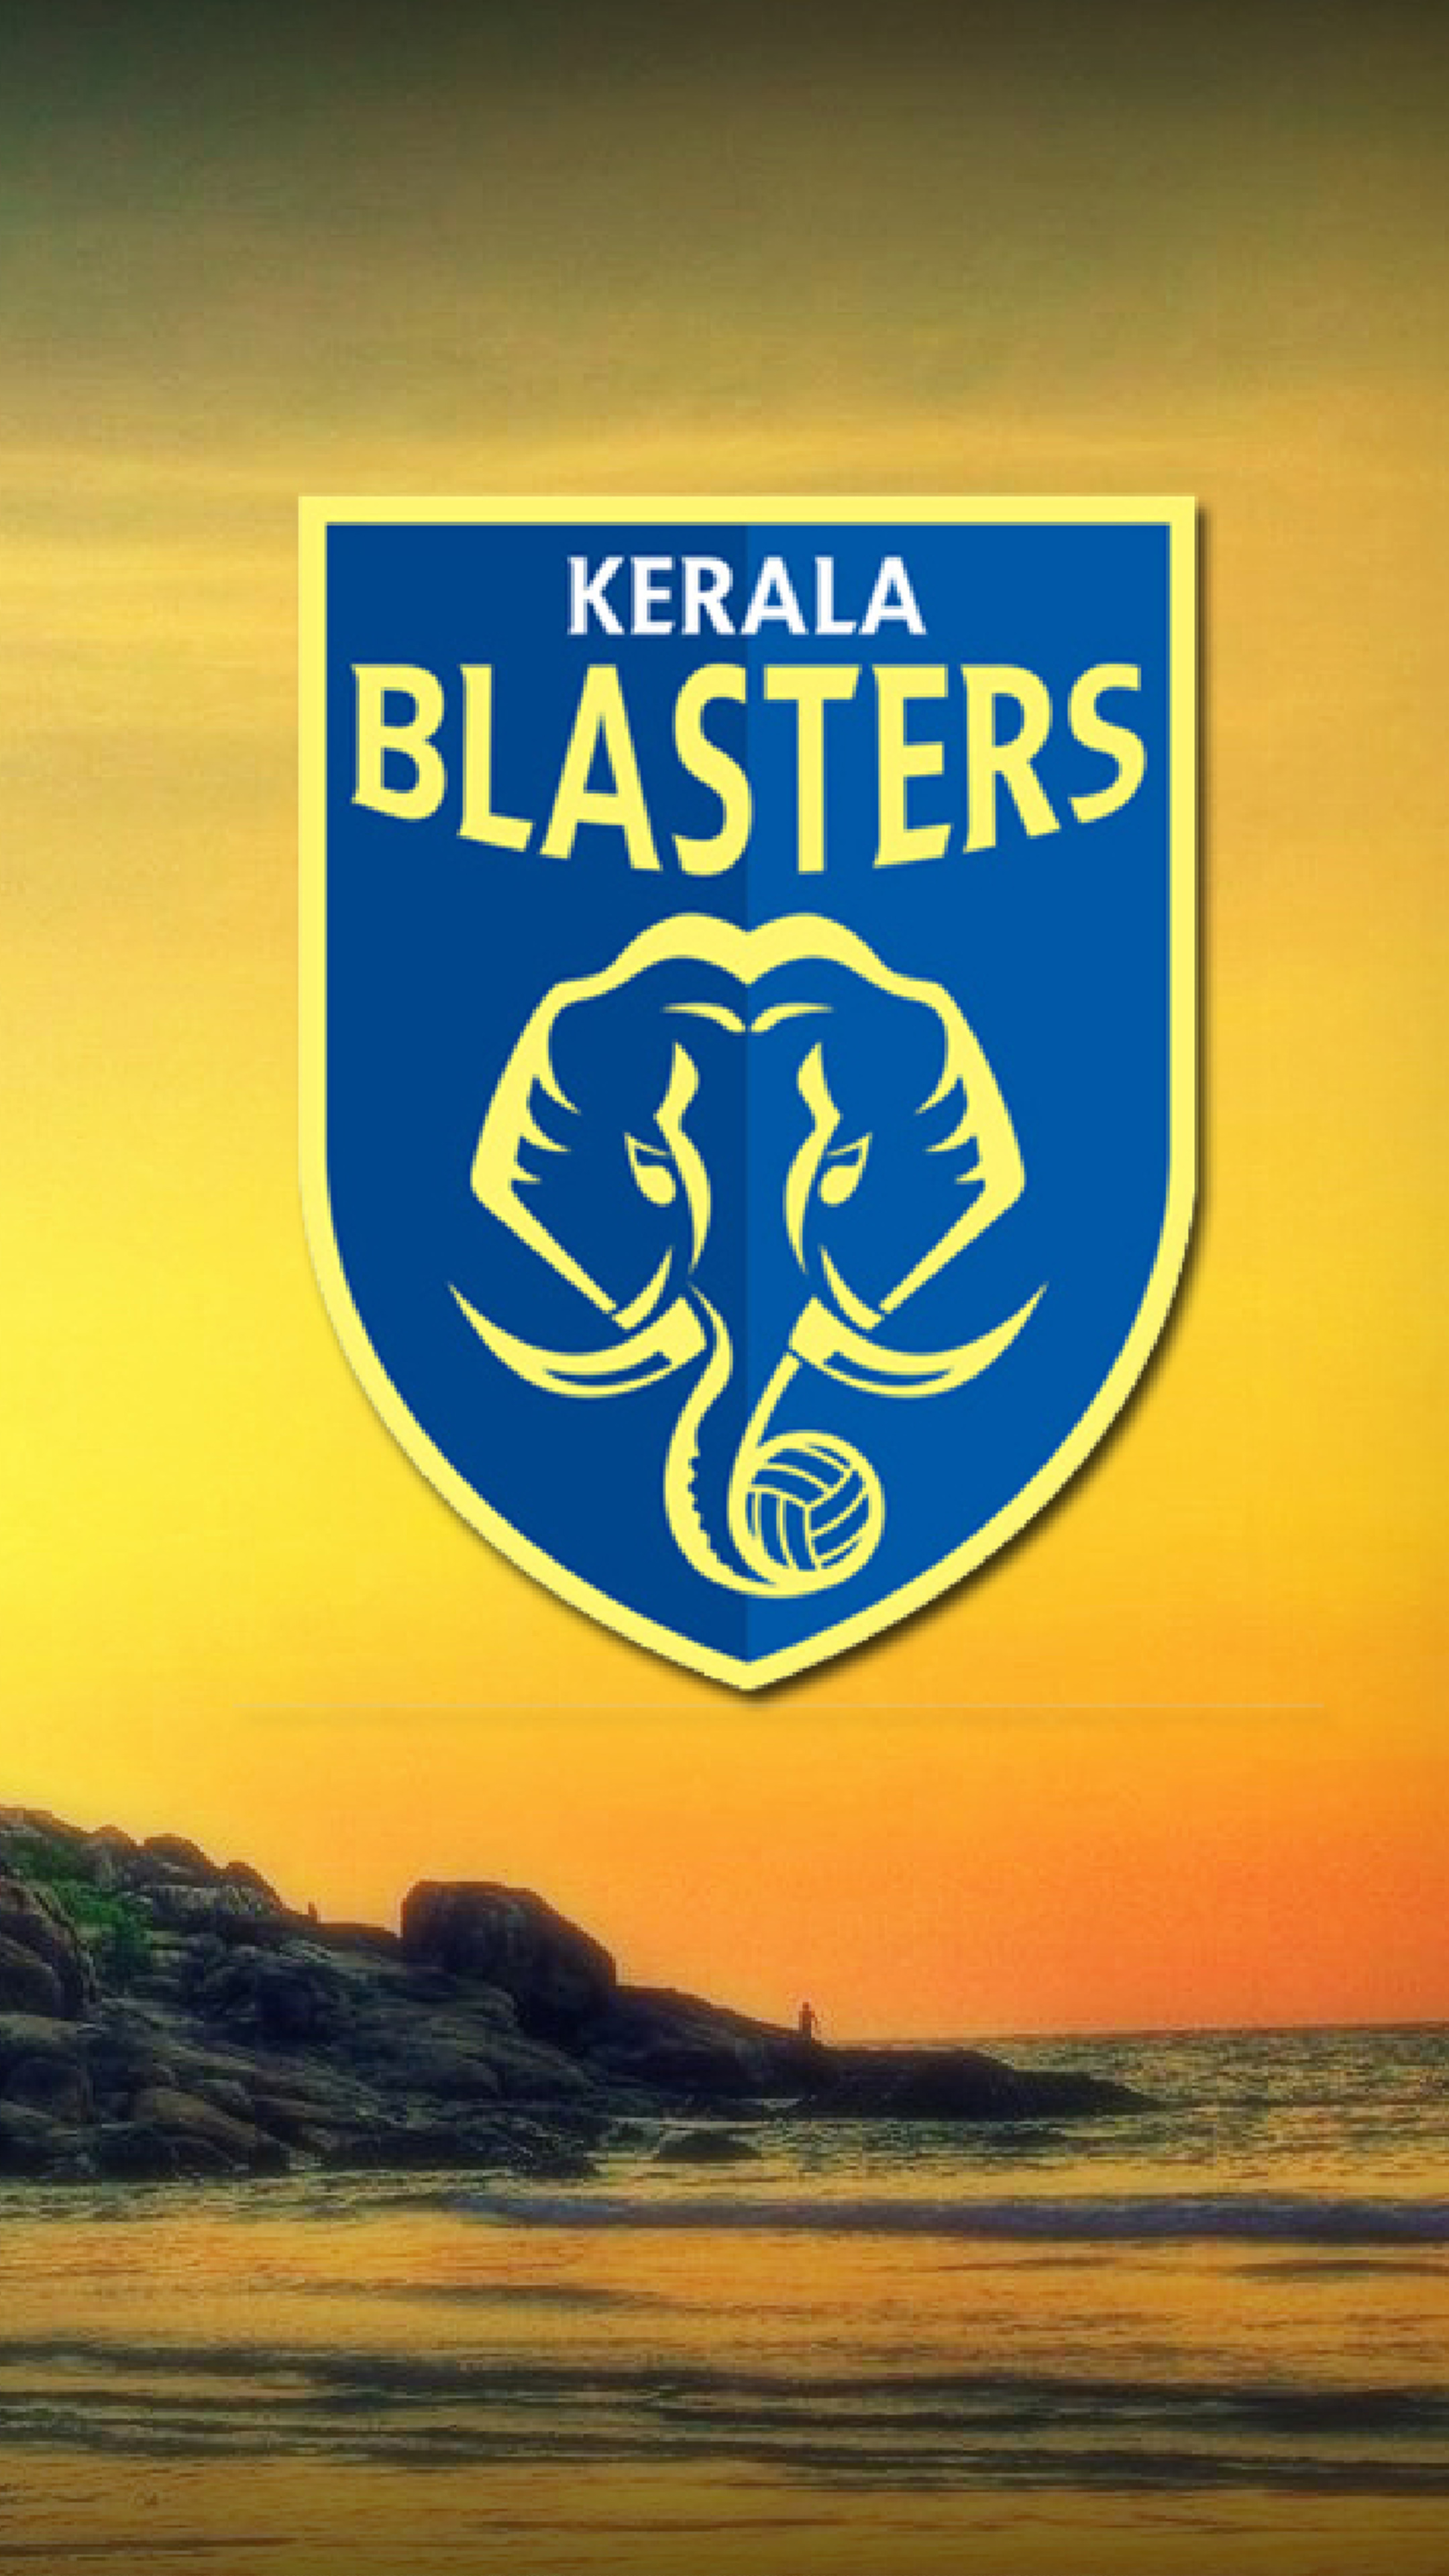 Kerala Blasters - Download Free HD Mobile Wallpapers